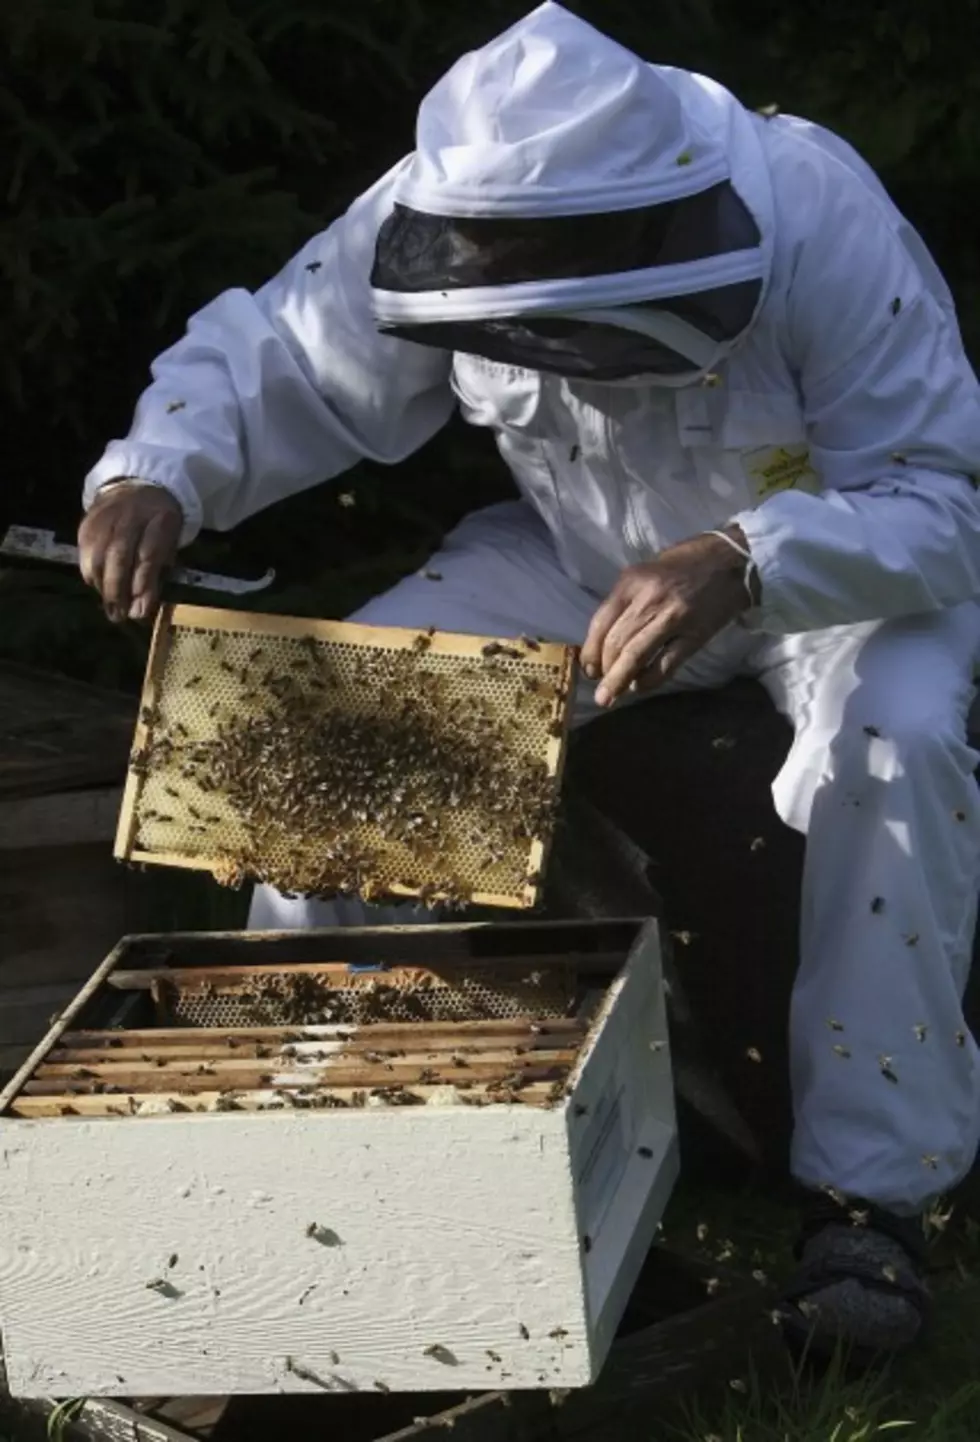 Beekeeper Survey Shows Drop In Colony Loss Last Winter